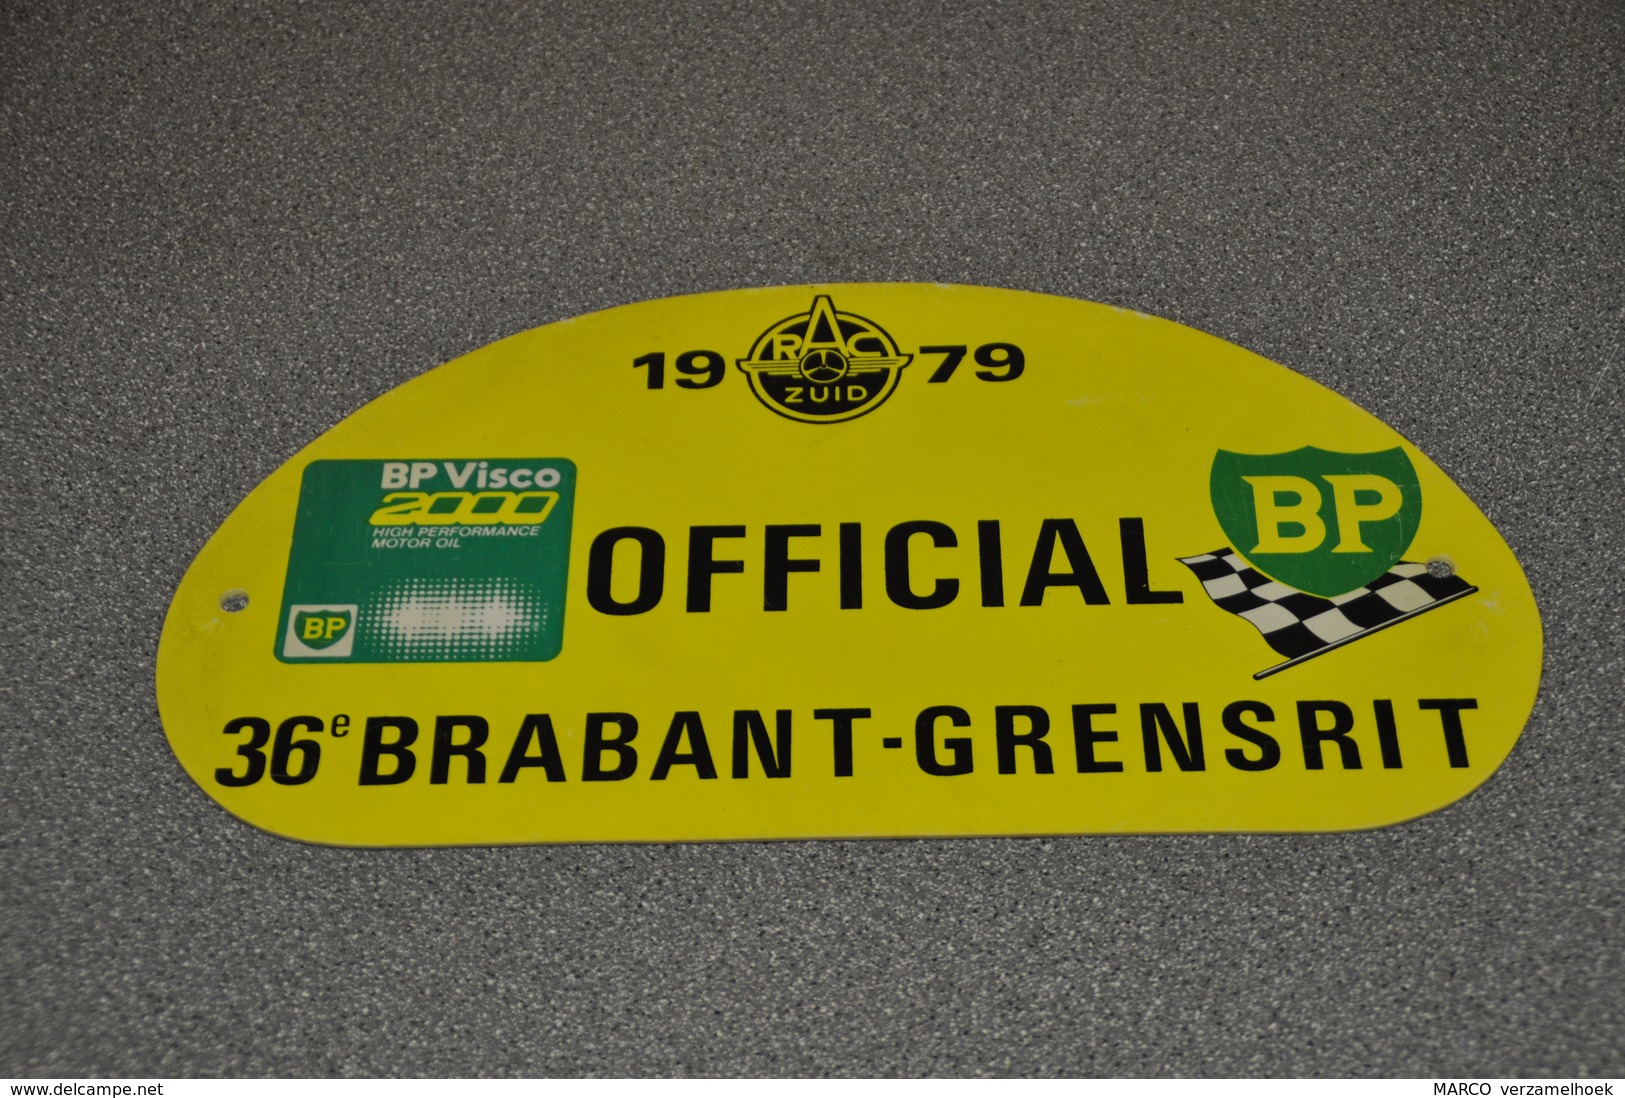 Rally Plaat-rallye Plaque Plastic: 36e Brabant-grensrit OFFICIAL 1979 RAC-zuid BP - Rallye (Rally) Plates